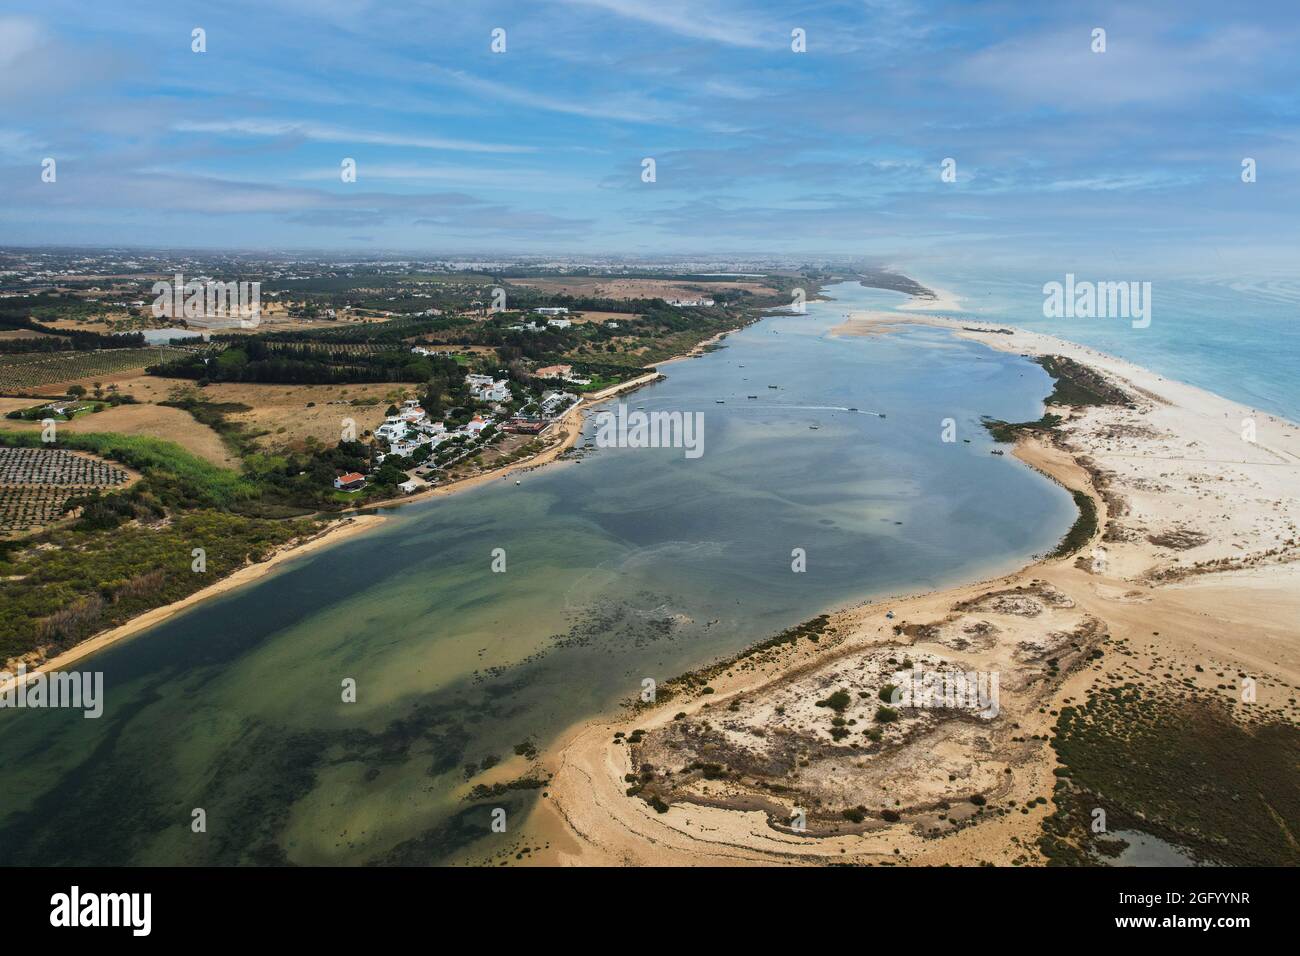 Aerial view of Praia da Fabrica, also known as Praia de Cacela Velha beach, a sandy barrier island at the mouth of the Ria Formosa in the Algarve regi Stock Photo